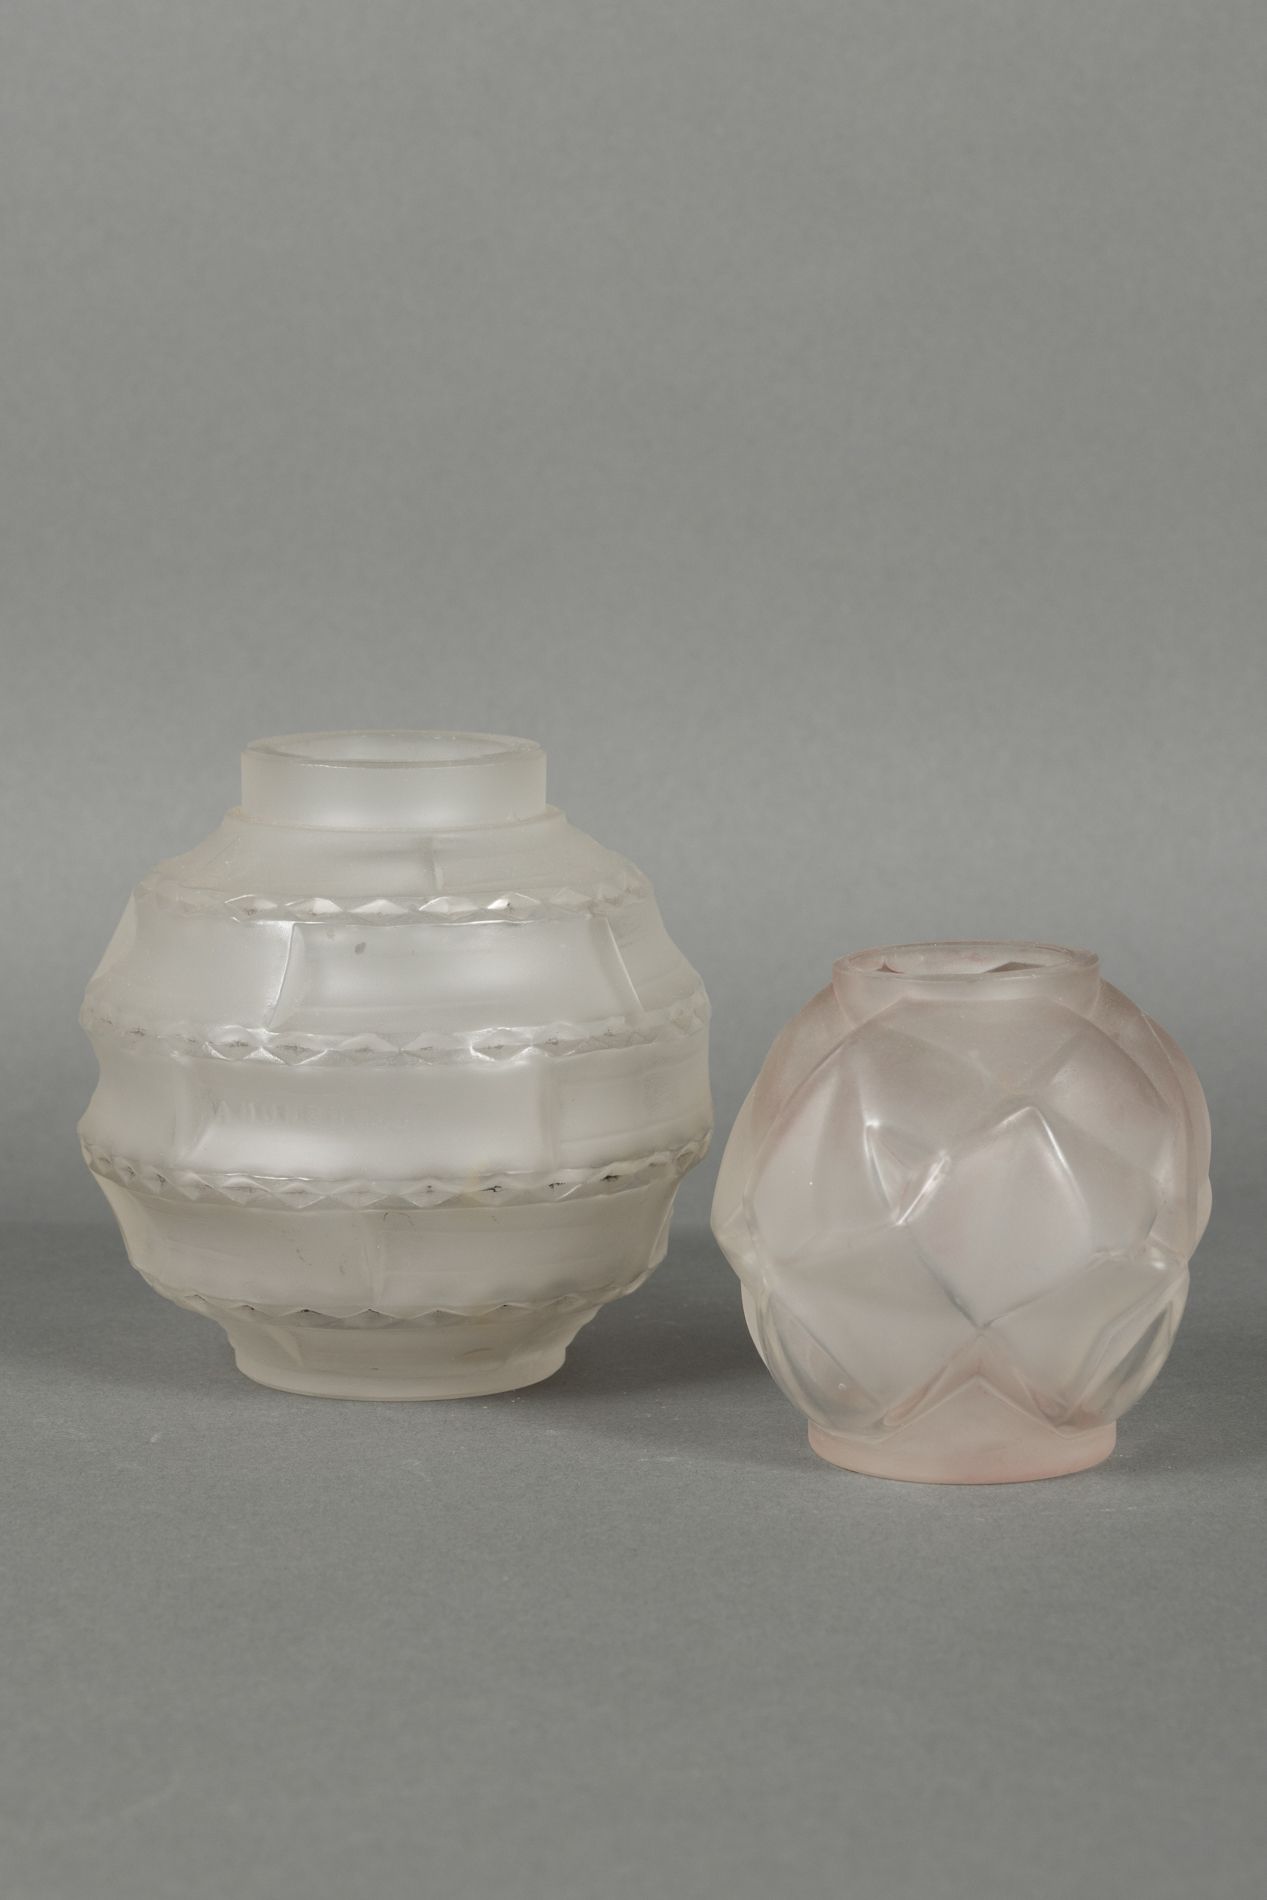 Null 安德烈-胡内贝尔(1896-1985)
一套两个小的模制玻璃球花瓶。已签名。 
H.10厘米 
H.7厘米